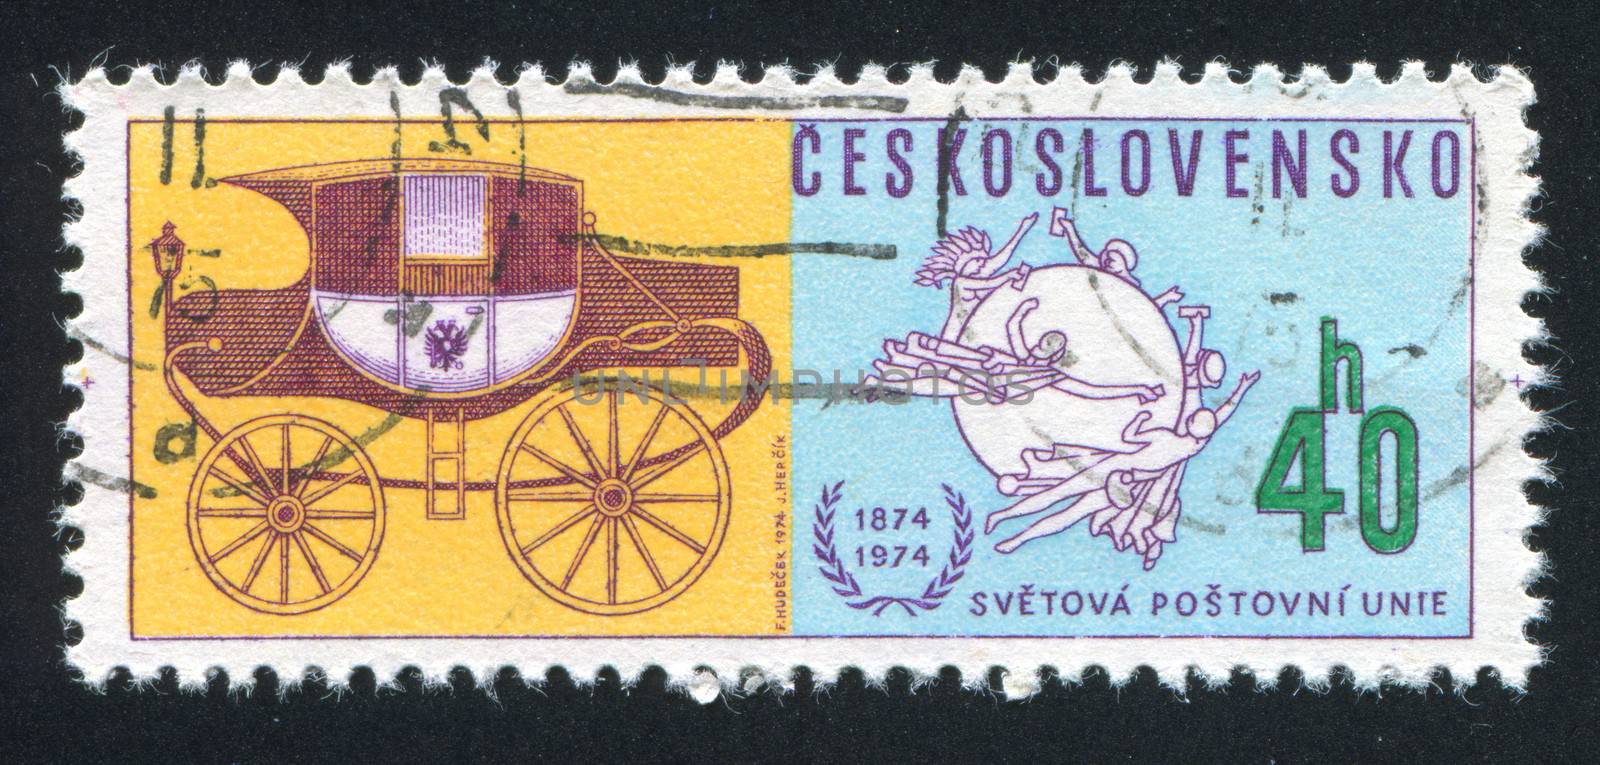 CZECHOSLOVAKIA - CIRCA 1974: stamp printed by Czechoslovakia, shows Universal Postal Union Emblem and Mail coach, circa 1974